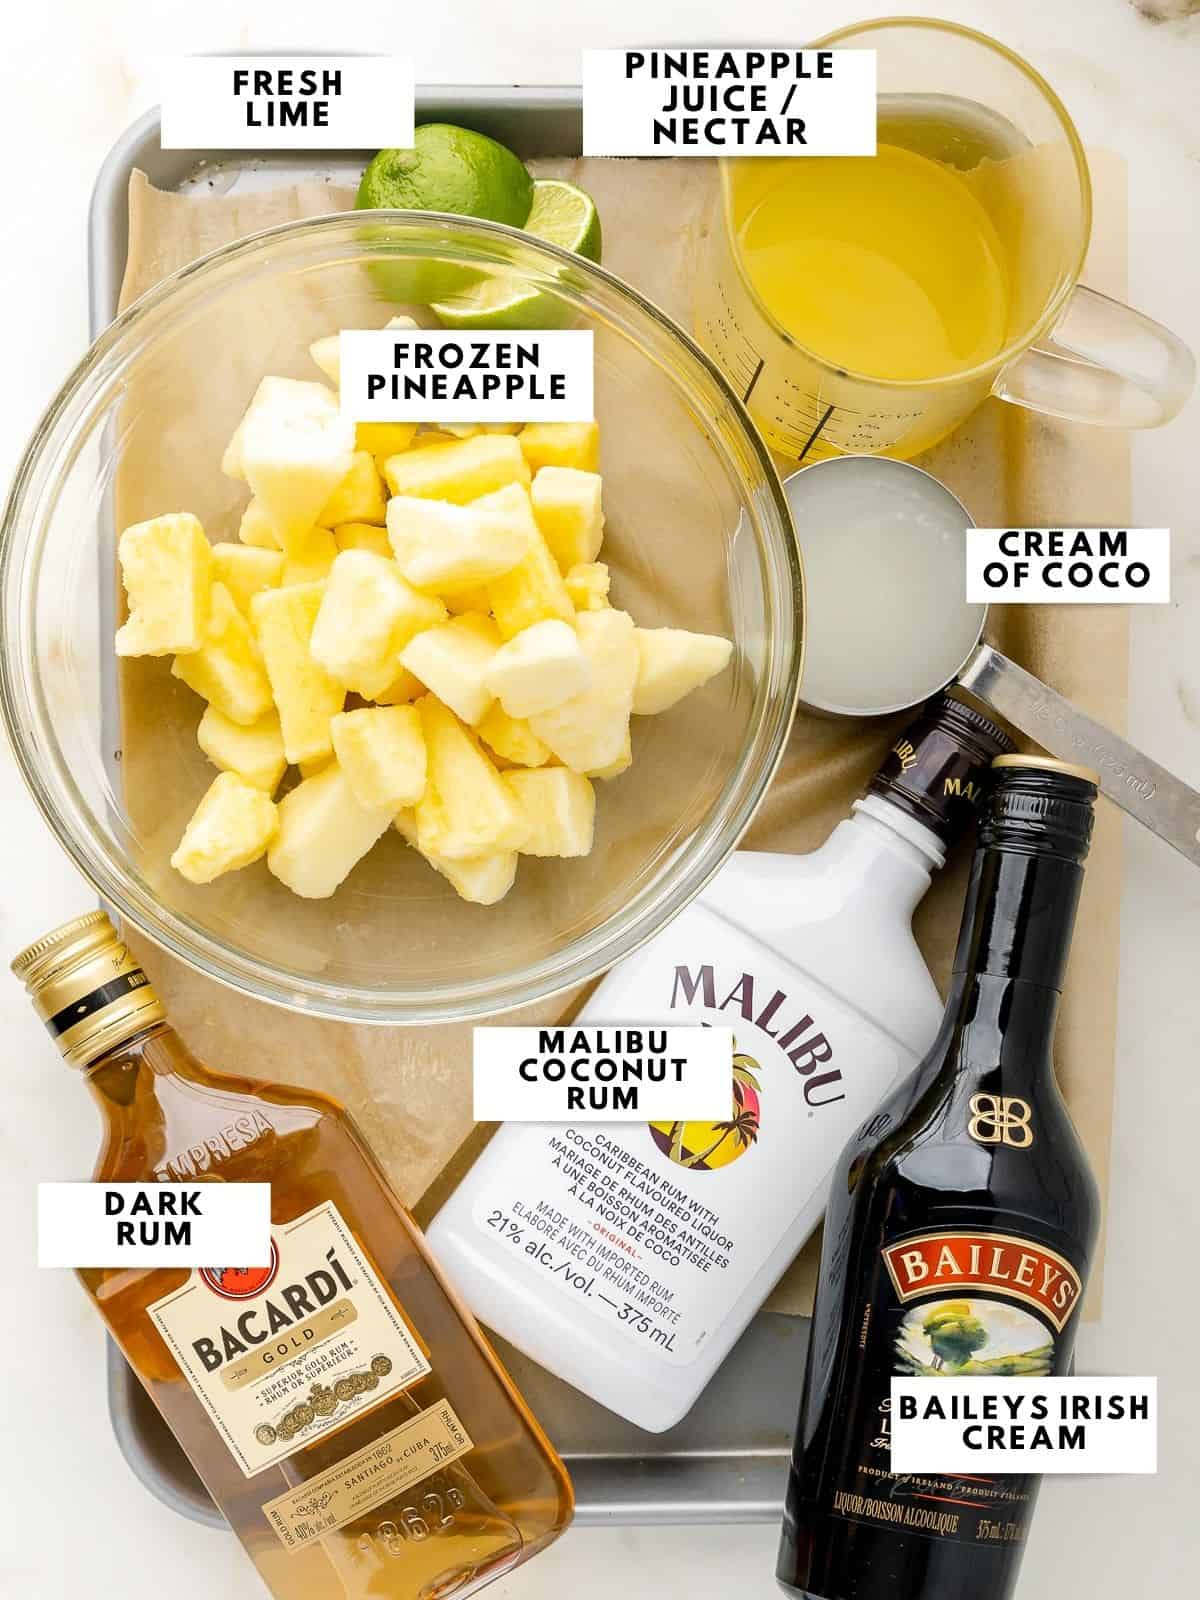 A photo of all ingredients: Frozen pineapple, cream of coco, malibu coconut rum, dark rum, bailey's irish cream, pineapple juice or nectar, and fresh lime